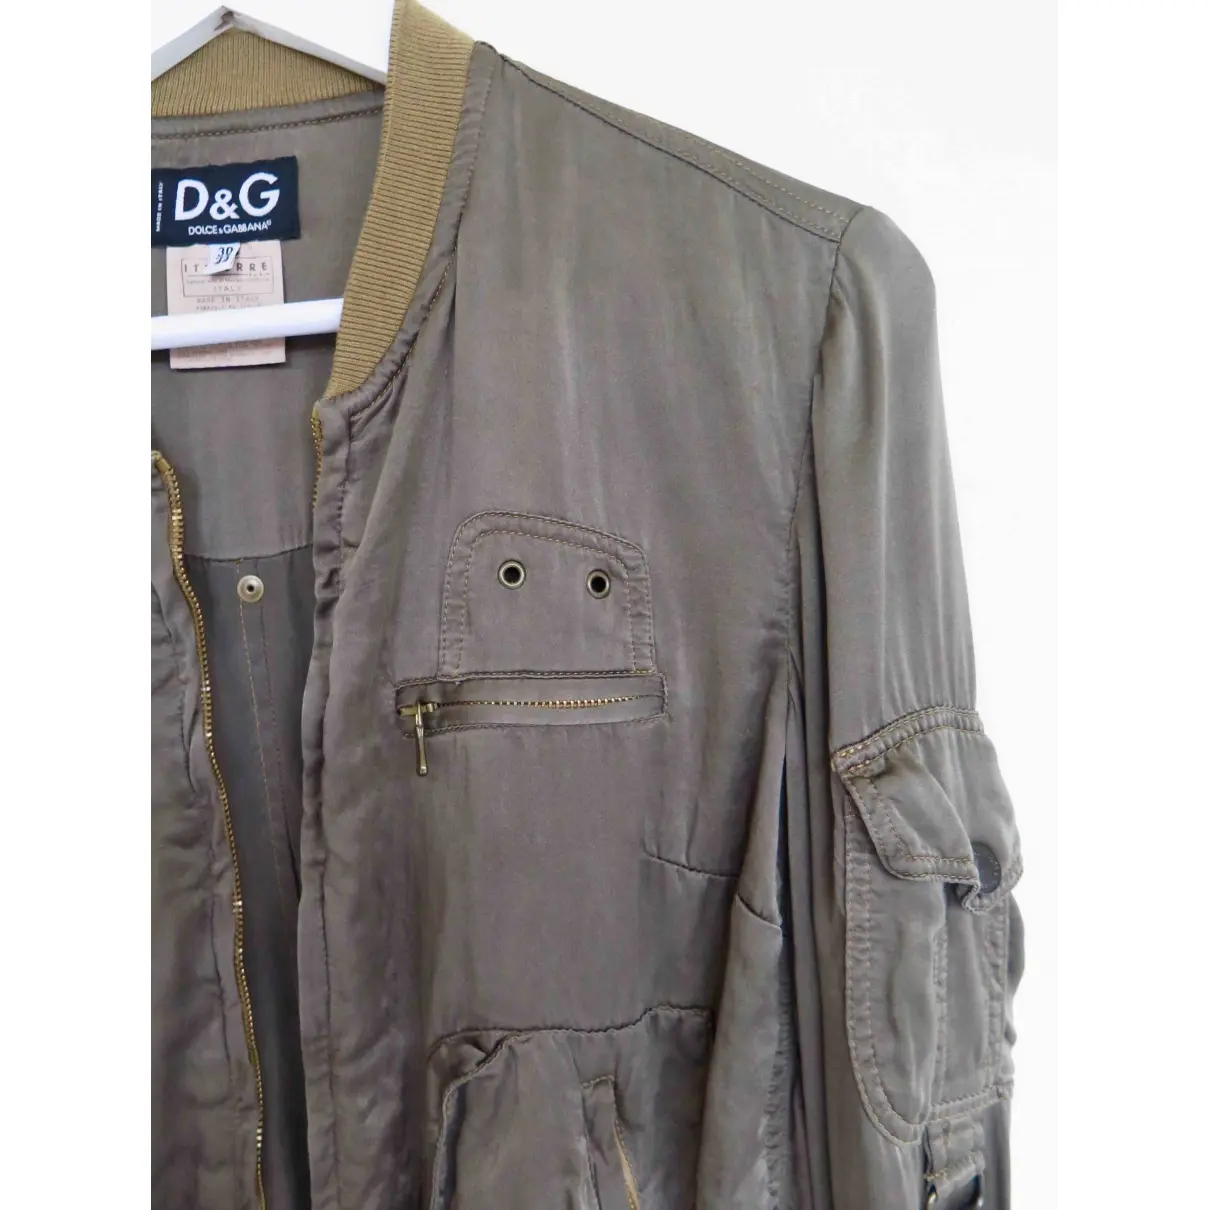 Buy D&G Silk jacket online